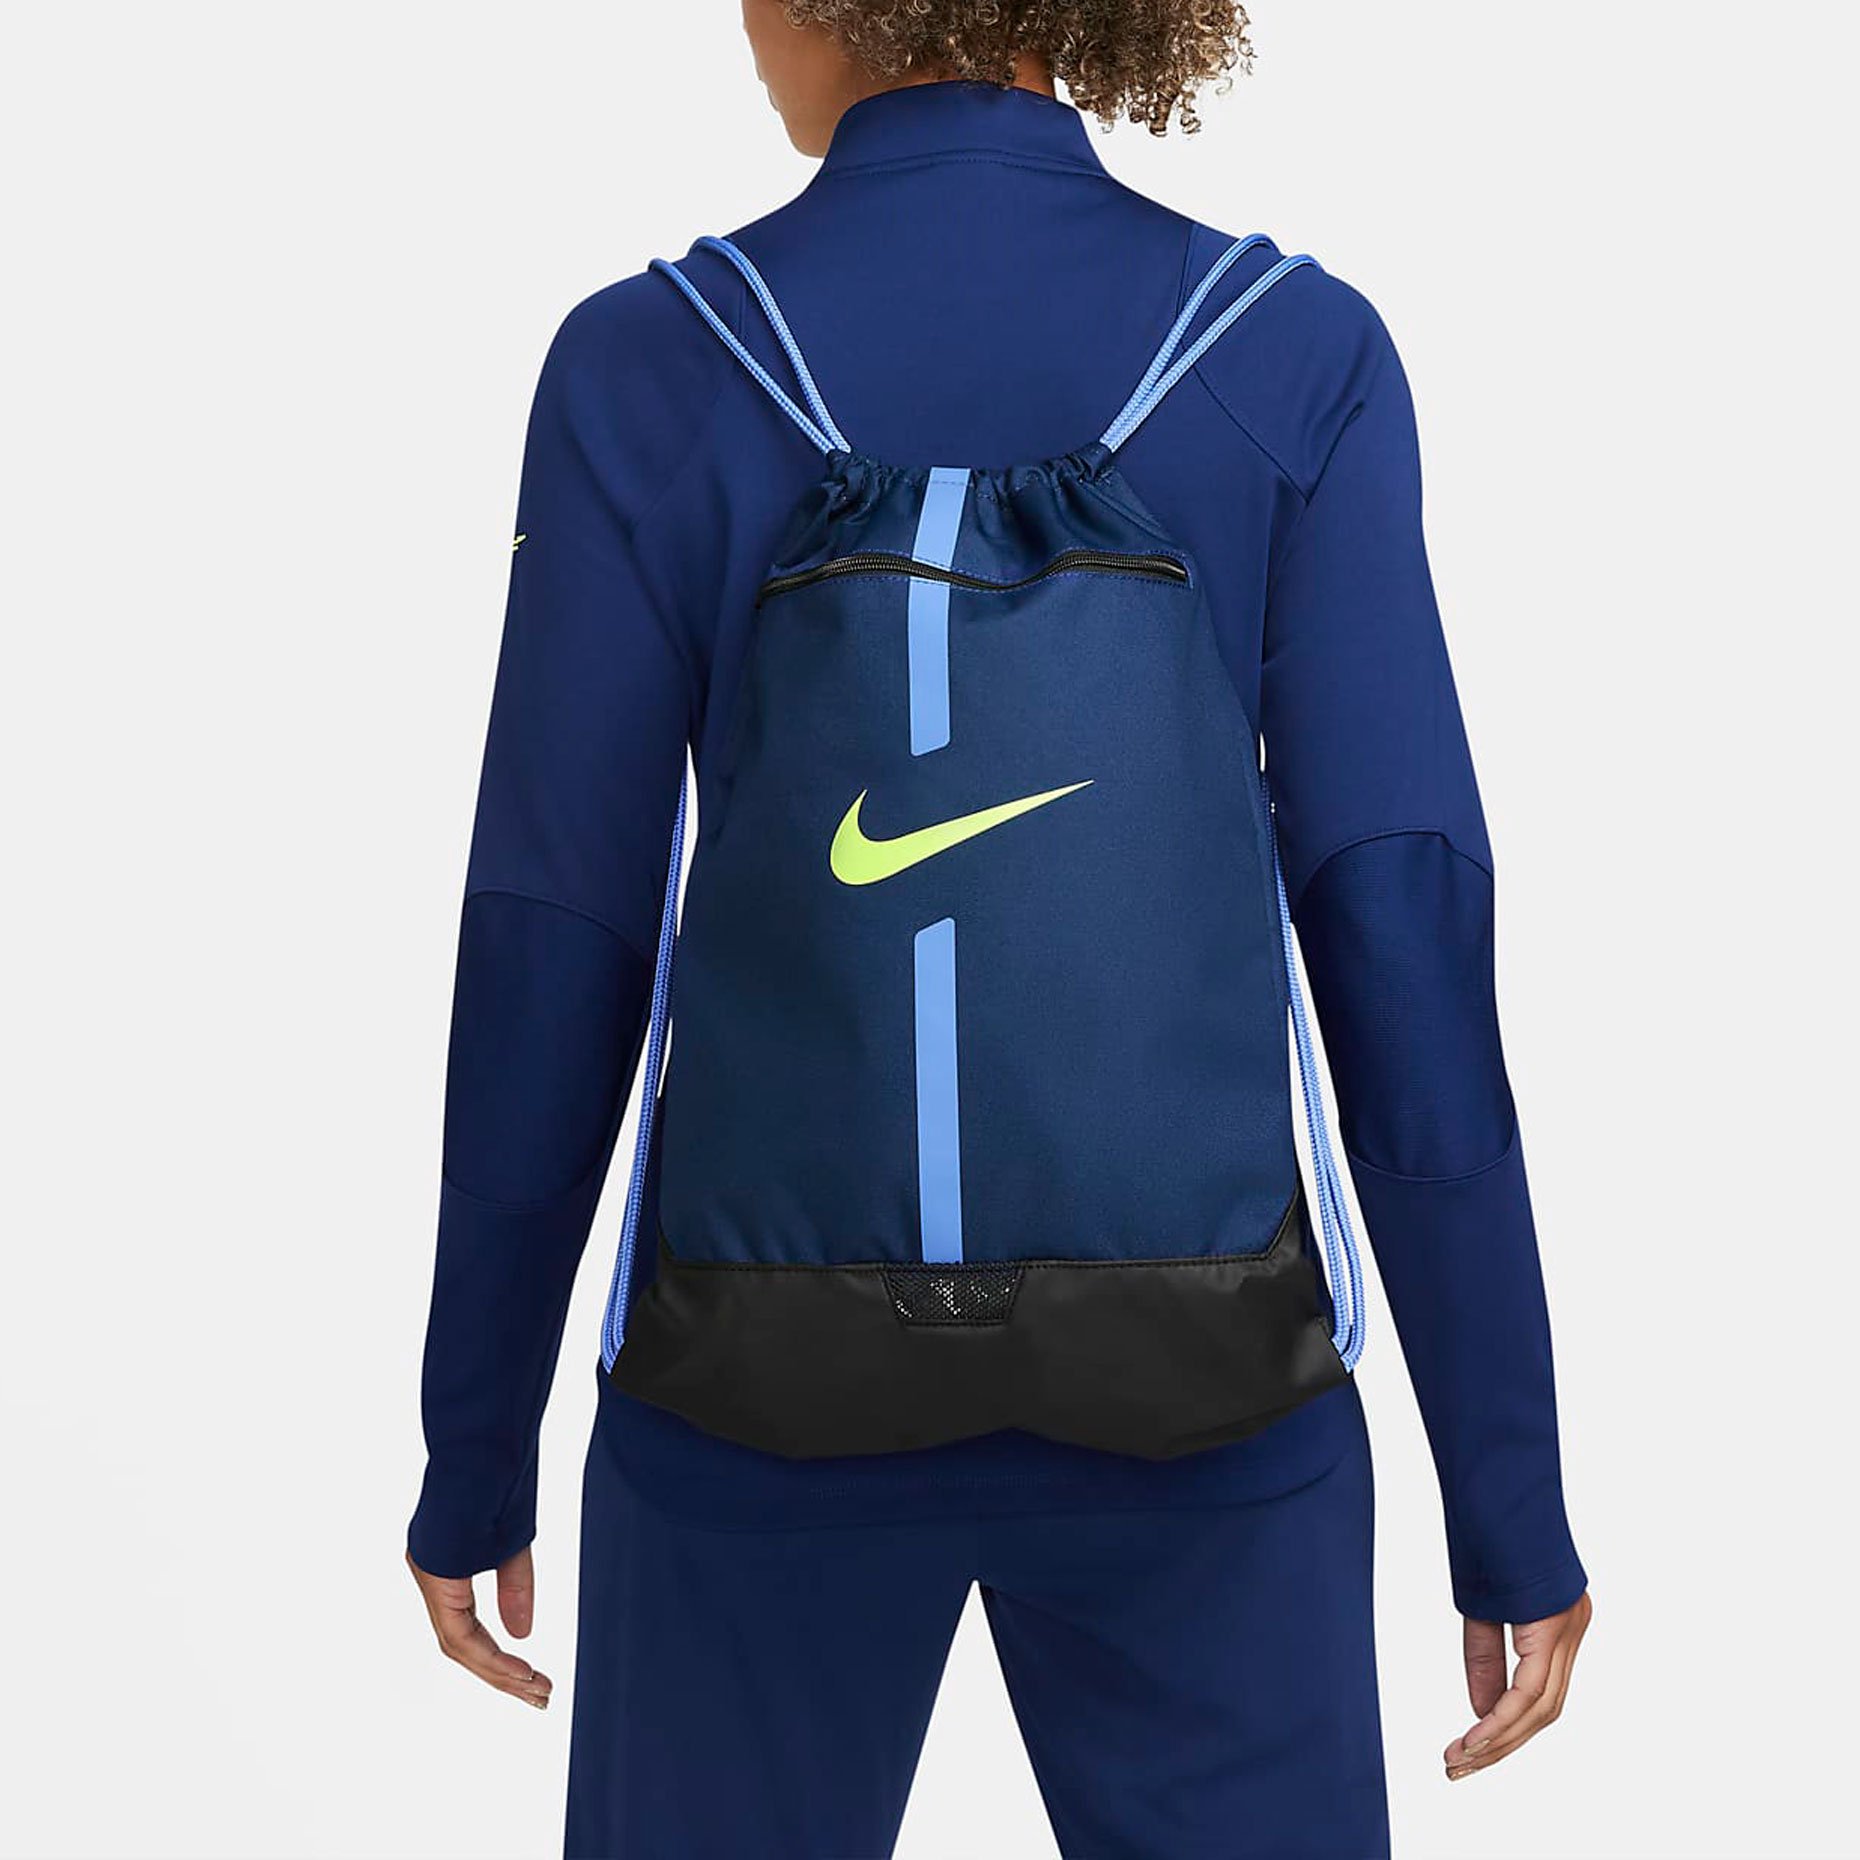 Мешок для обуви Nike Academy Gymsack